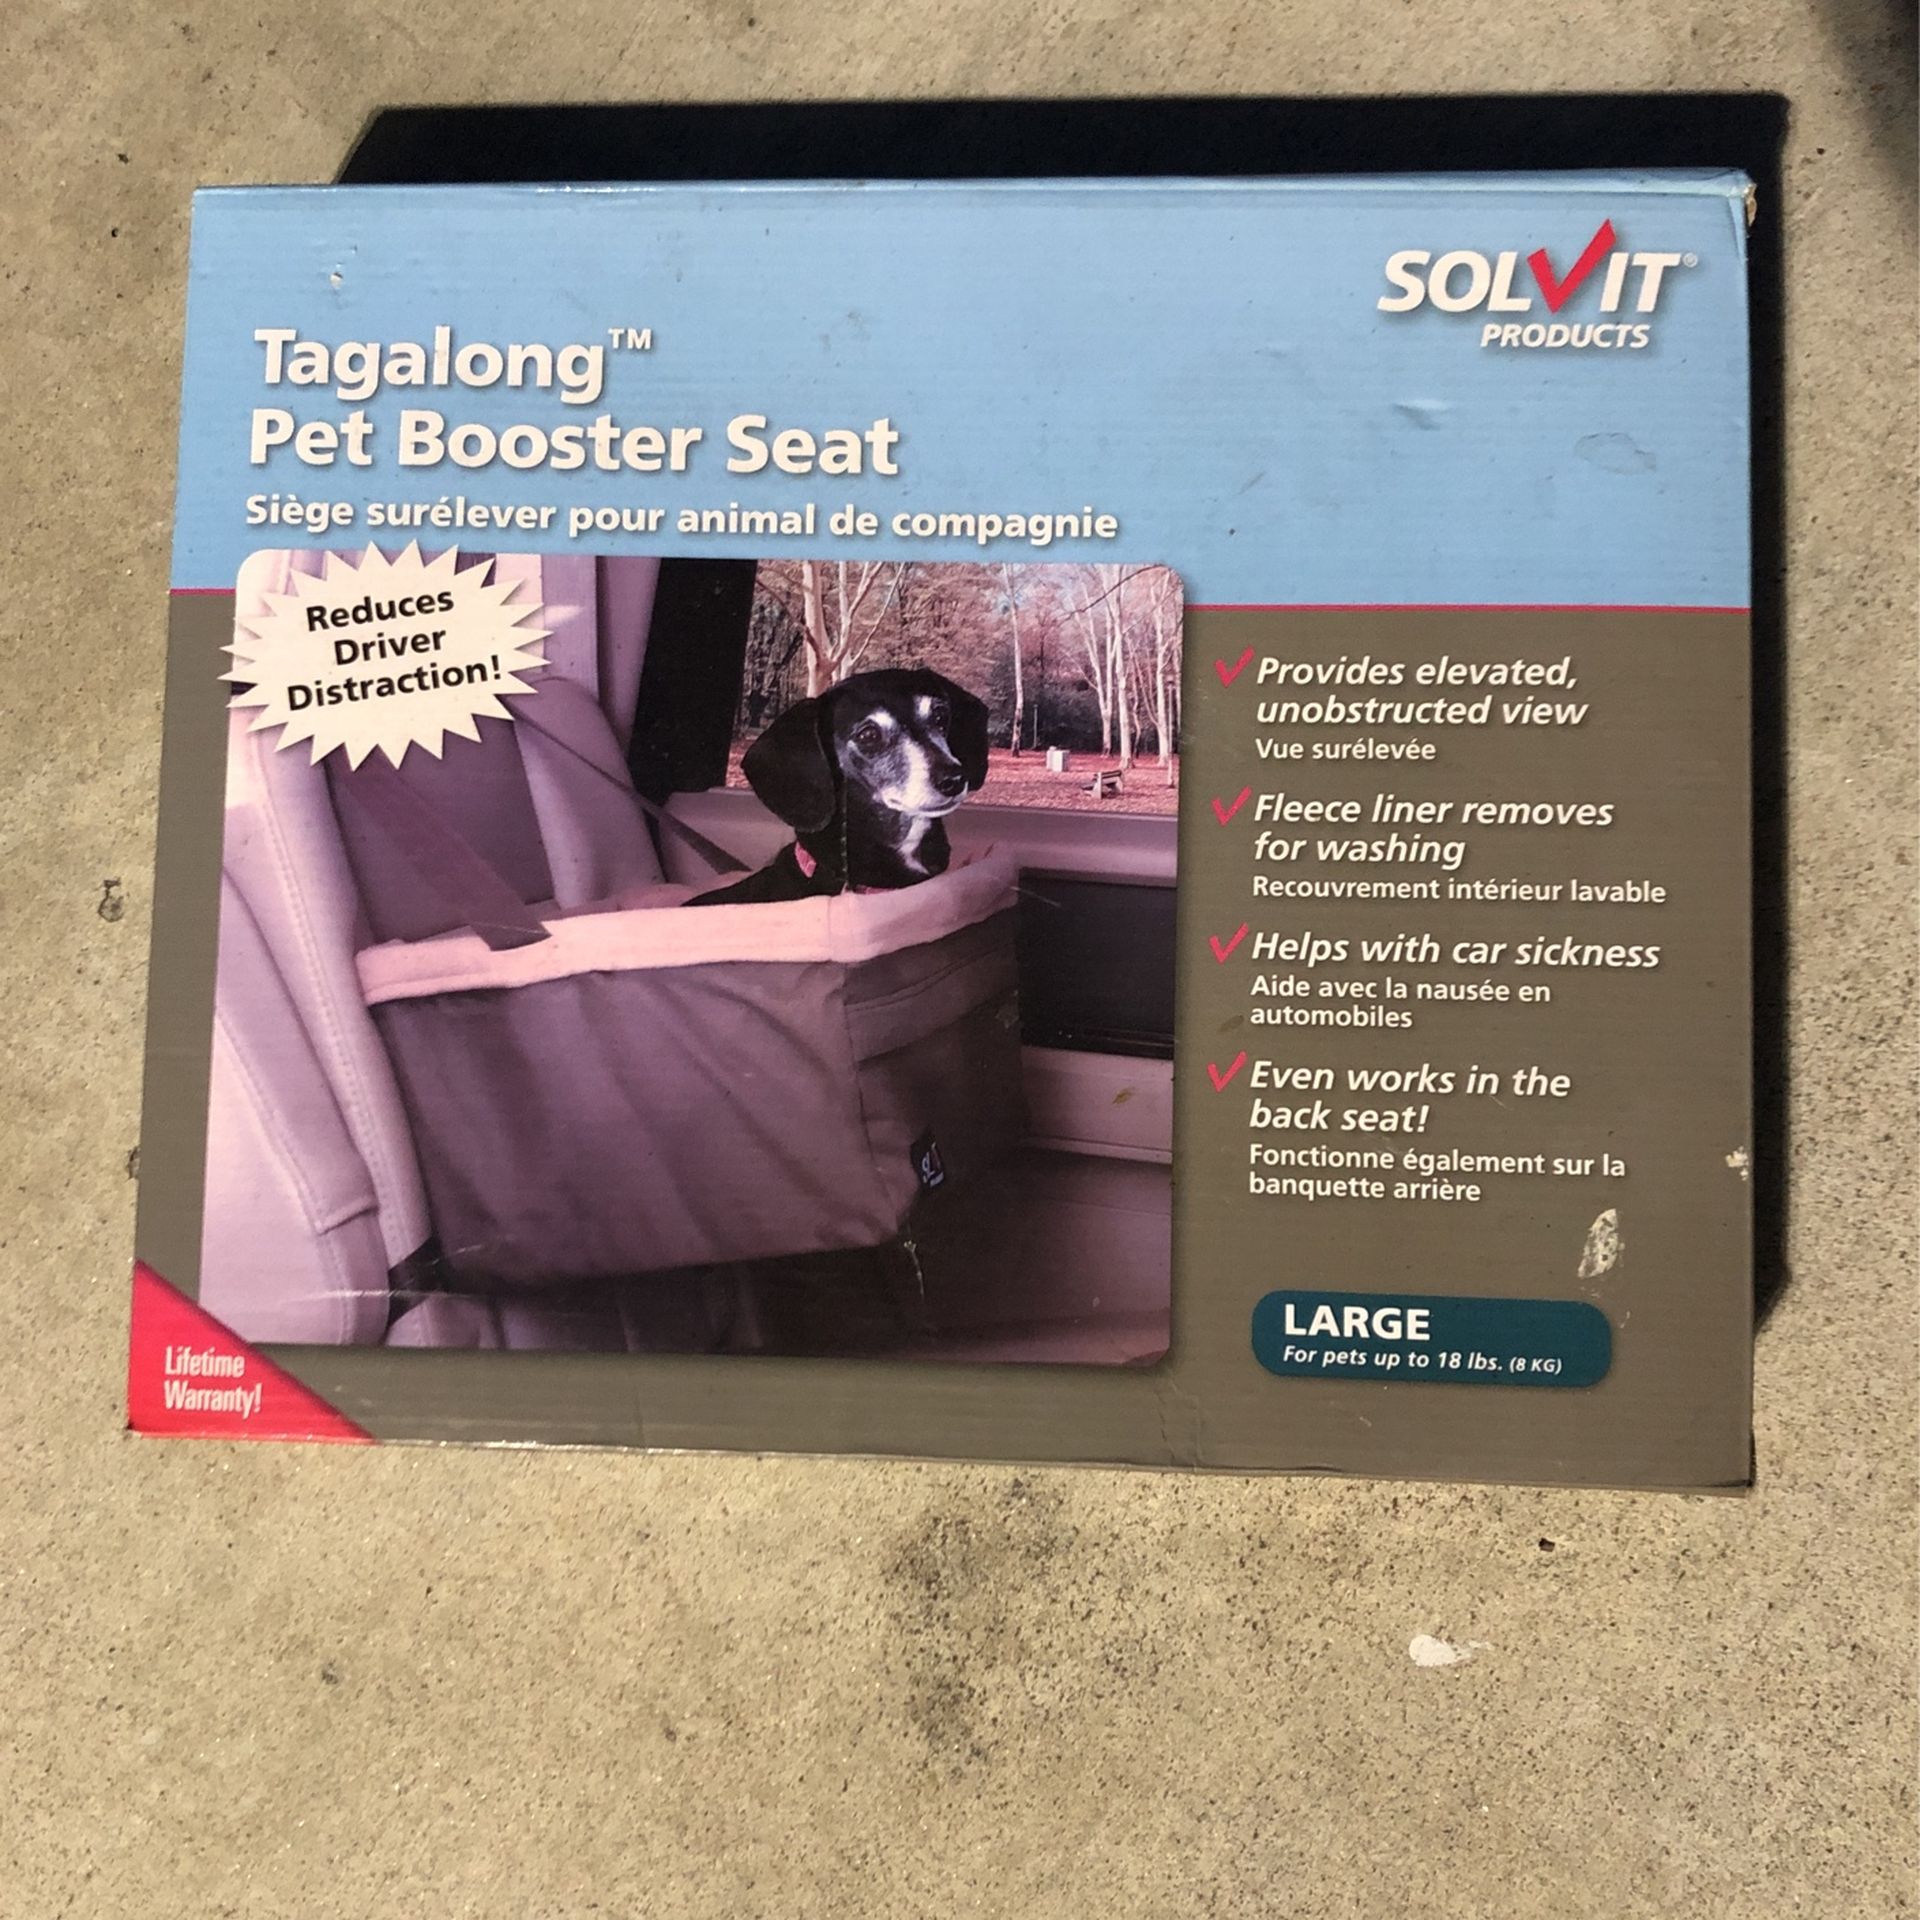 Tagalong Pet Booster Seat